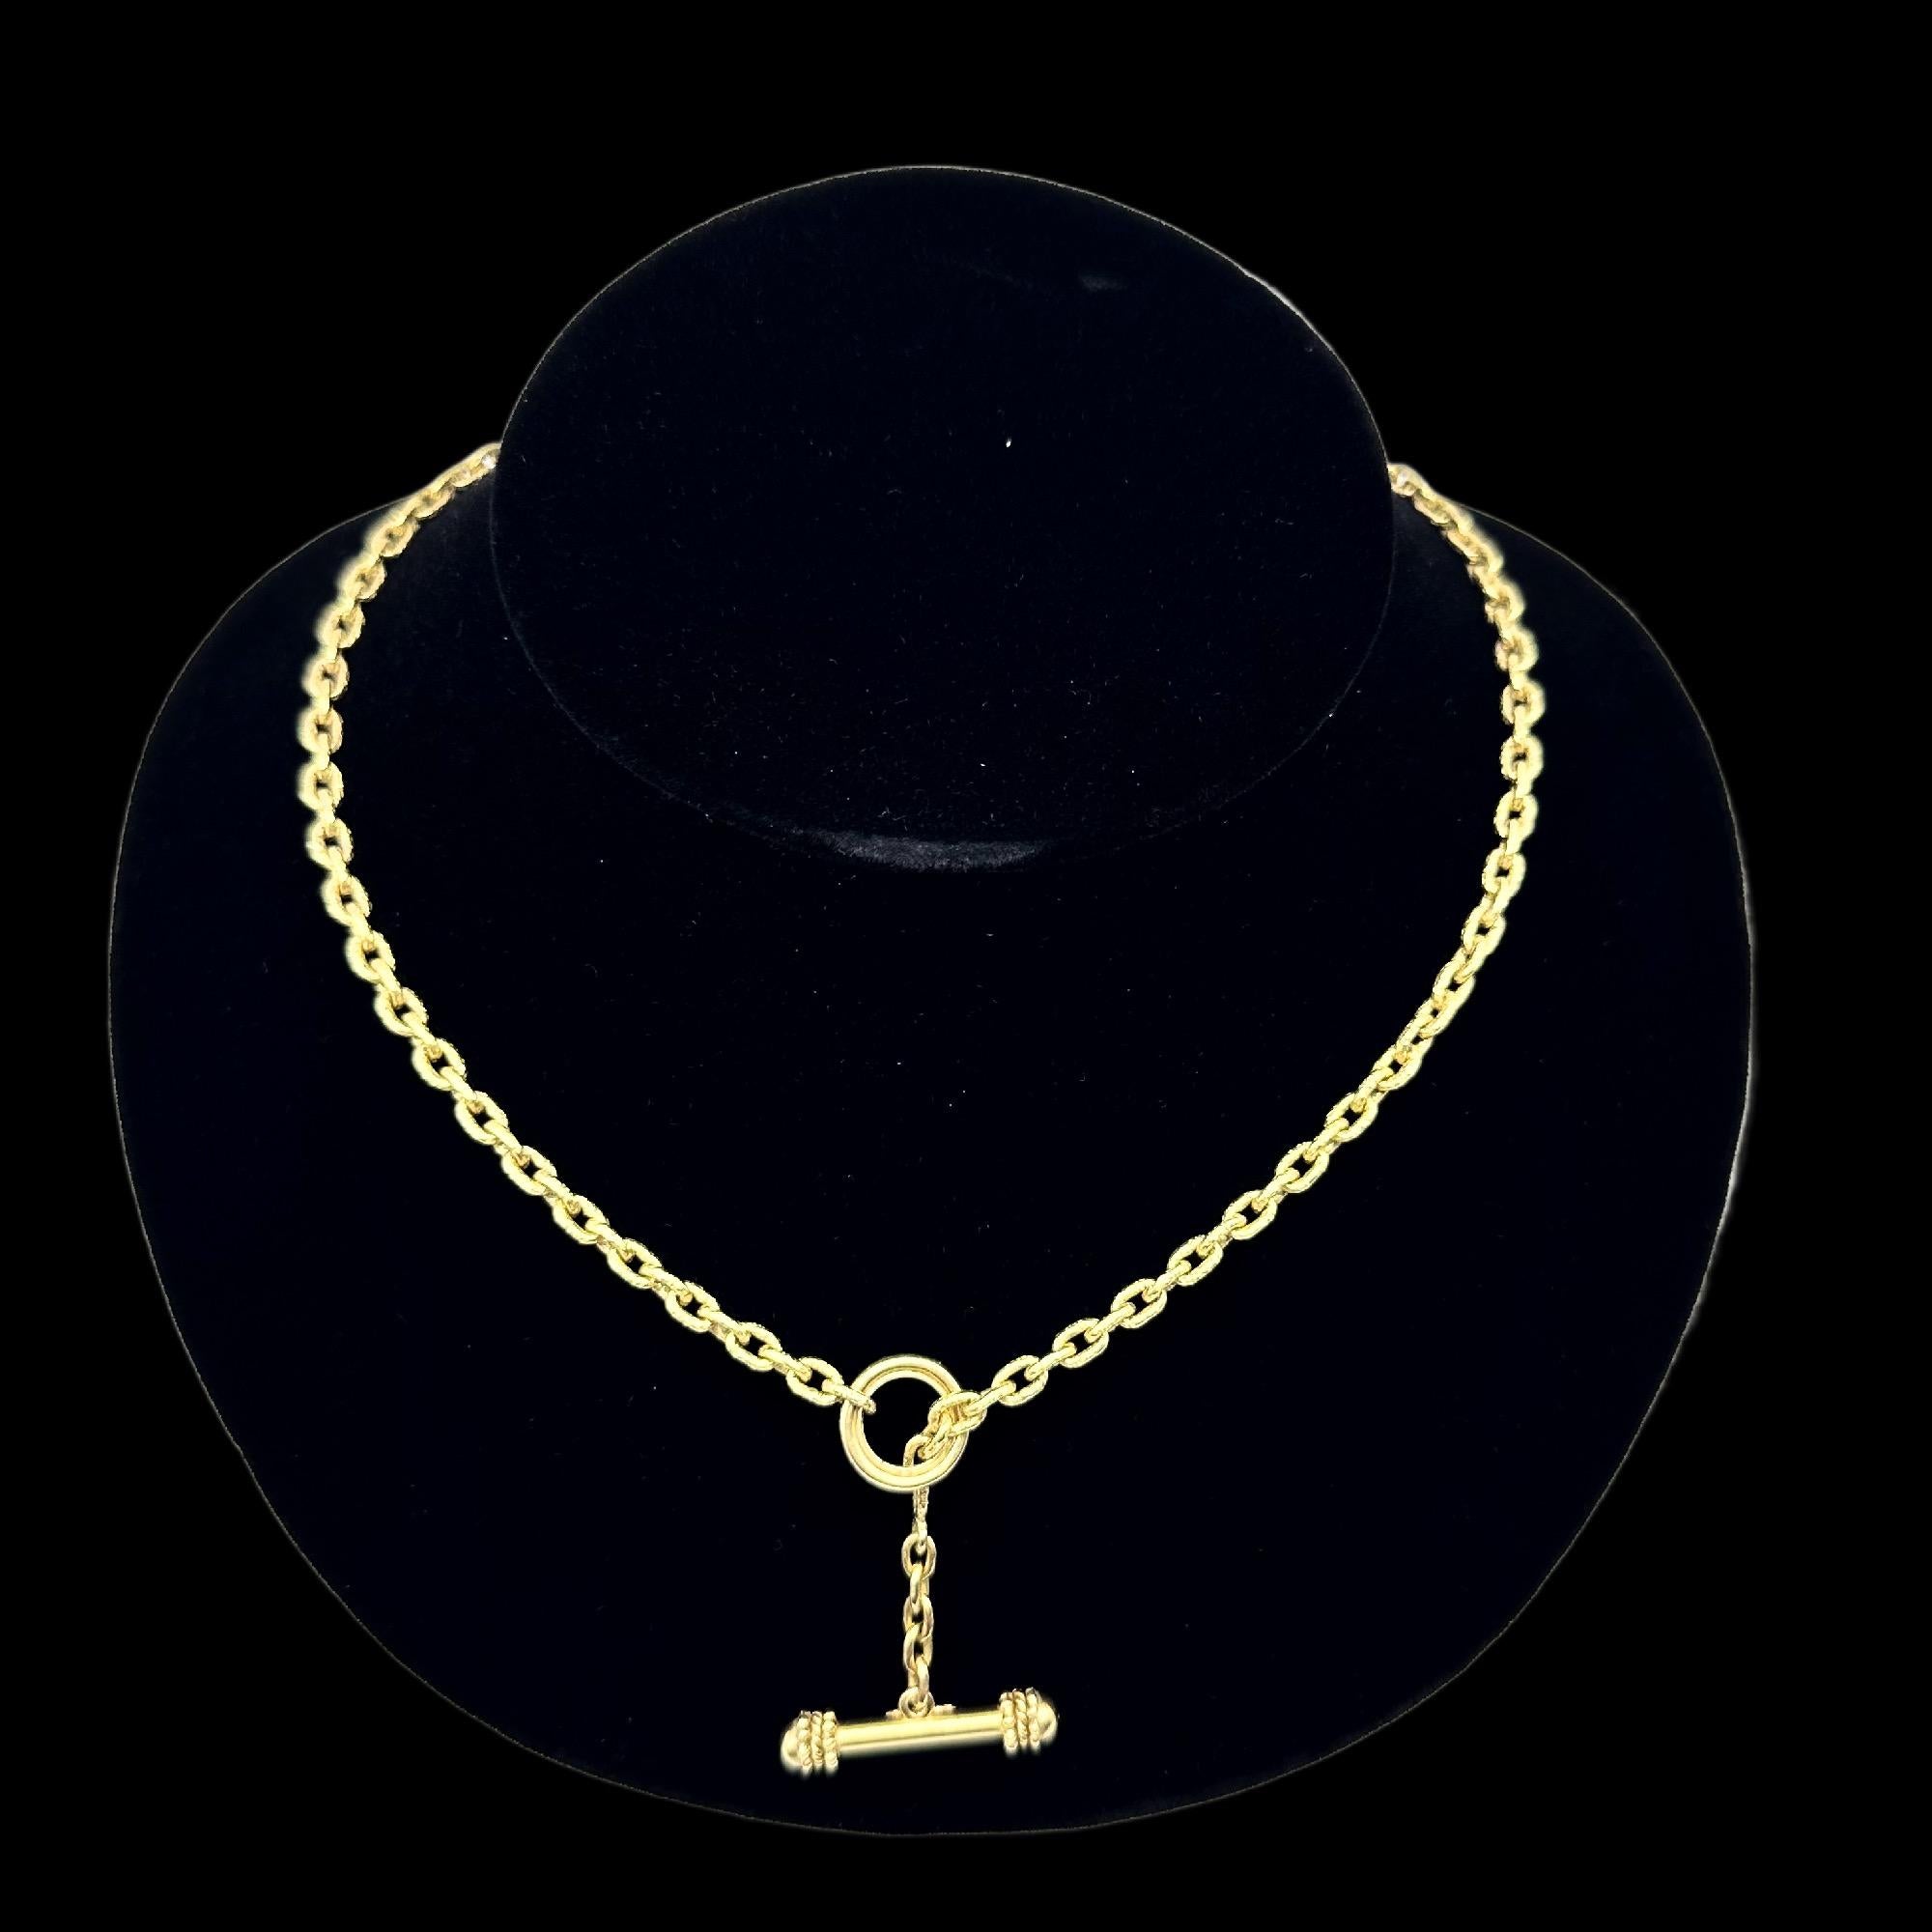 Elizabeth Locke ORVIETA Hammer Oval Link Necklace
Style:  Chain
Metal: 19K Yellow Gold
Size:  18' Inches
Hallmark:  EL 19K
Includes:  Elegant Necklace Box
Retail:  $9,850

Sku#16000TBJ122422